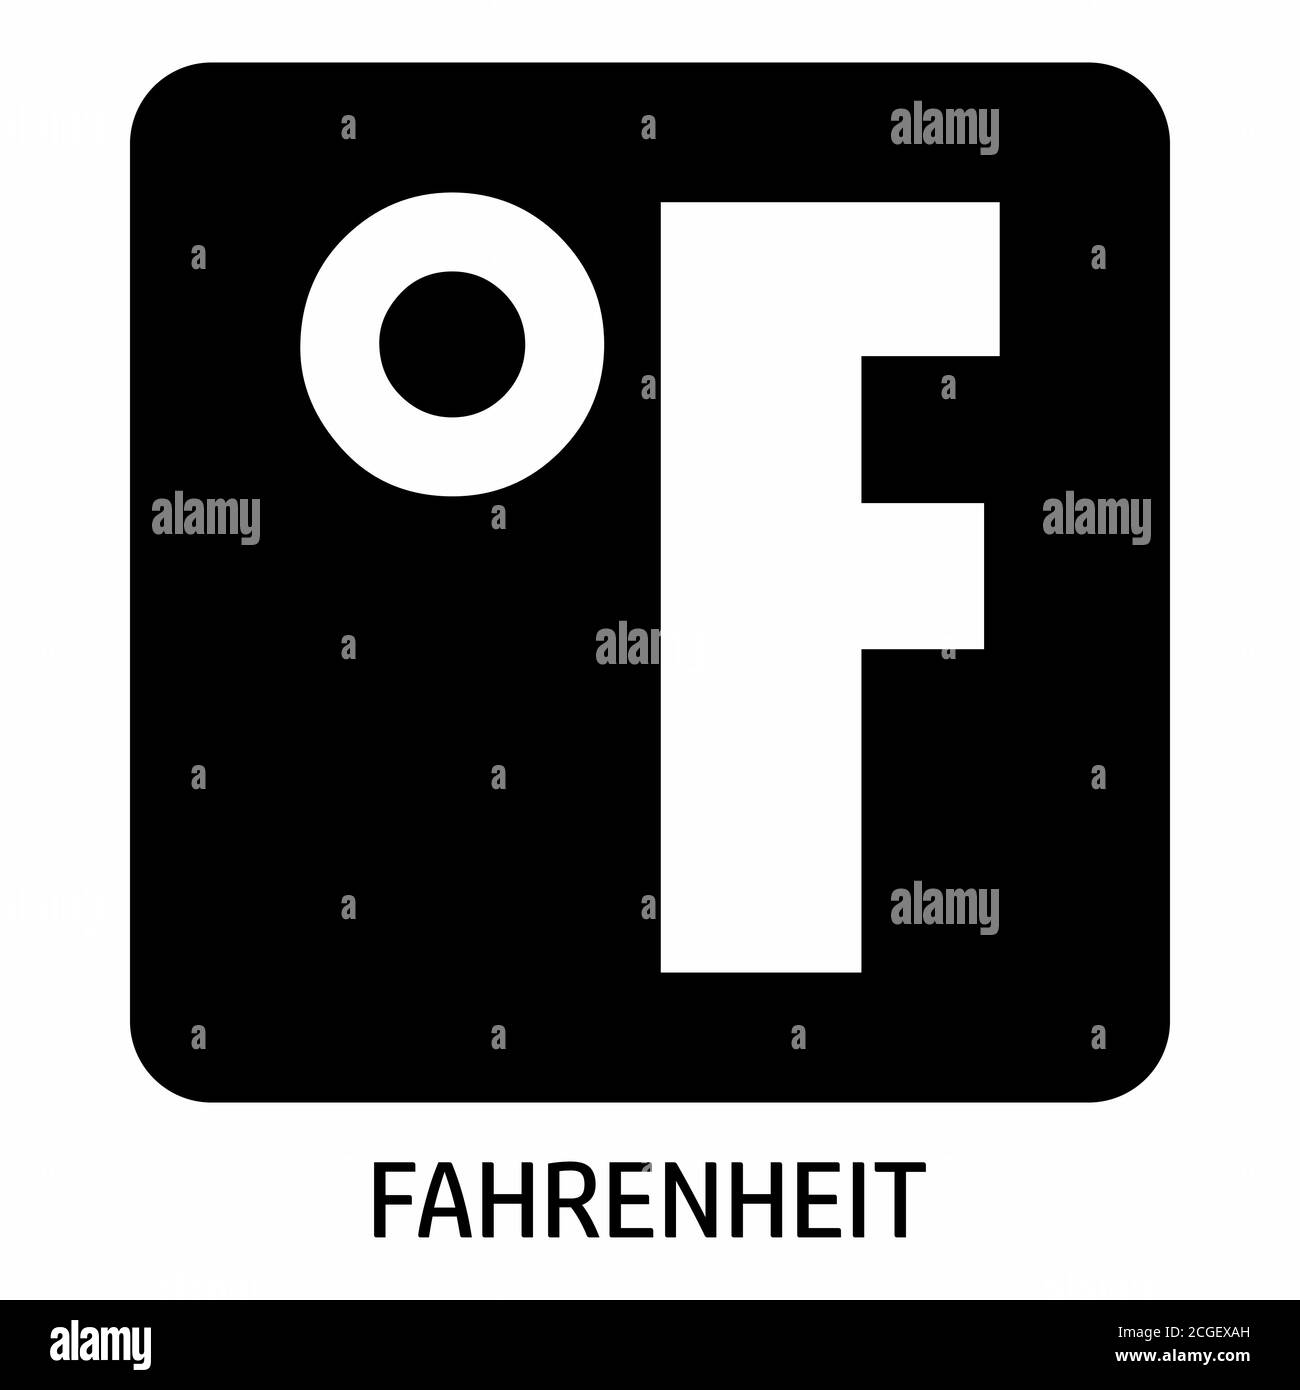 Fahrenheit degree icon illustration Stock Vector